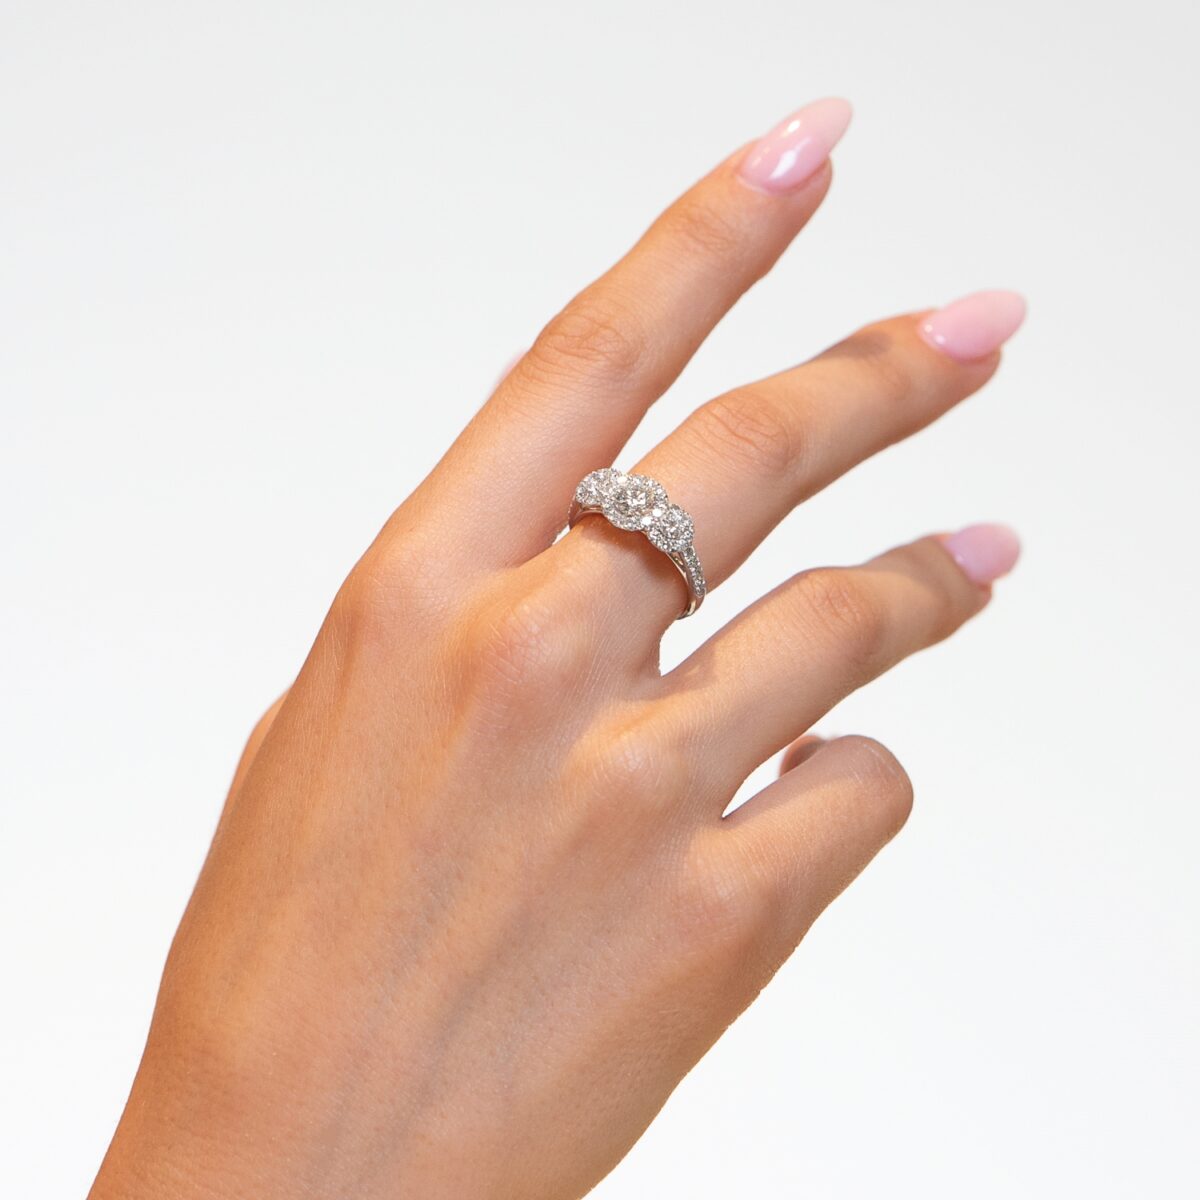 Jewellers - Μονόπετρο δακτυλίδι Trinity με μπριγιάν